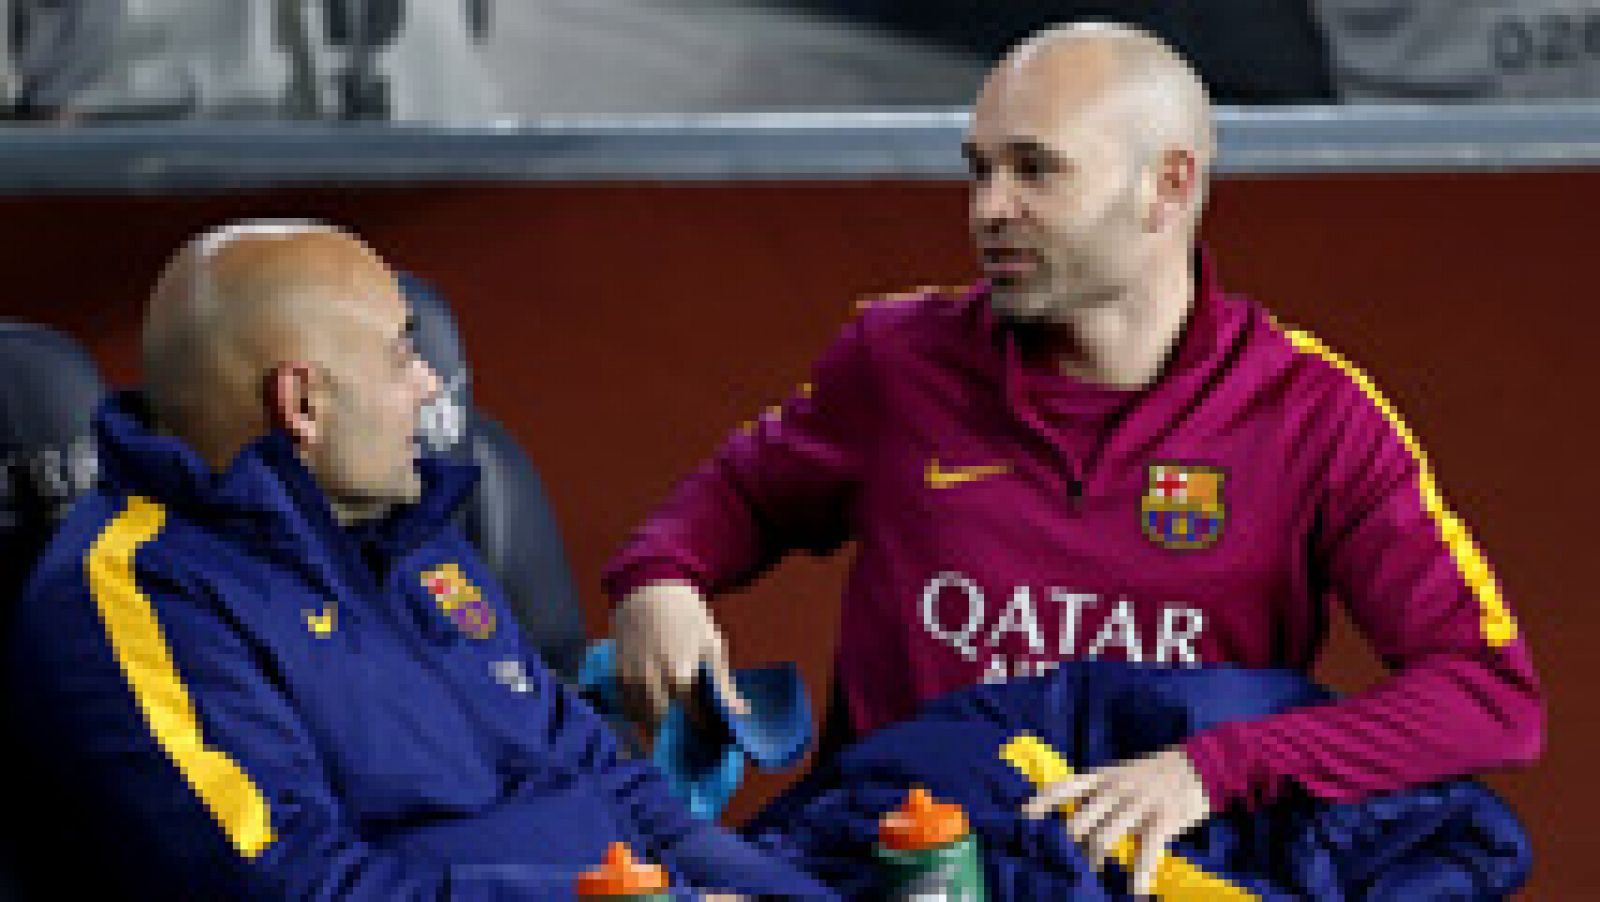 Telediario 1: El vestuario del Barça ya habla de conseguir otro "triplete" | RTVE Play